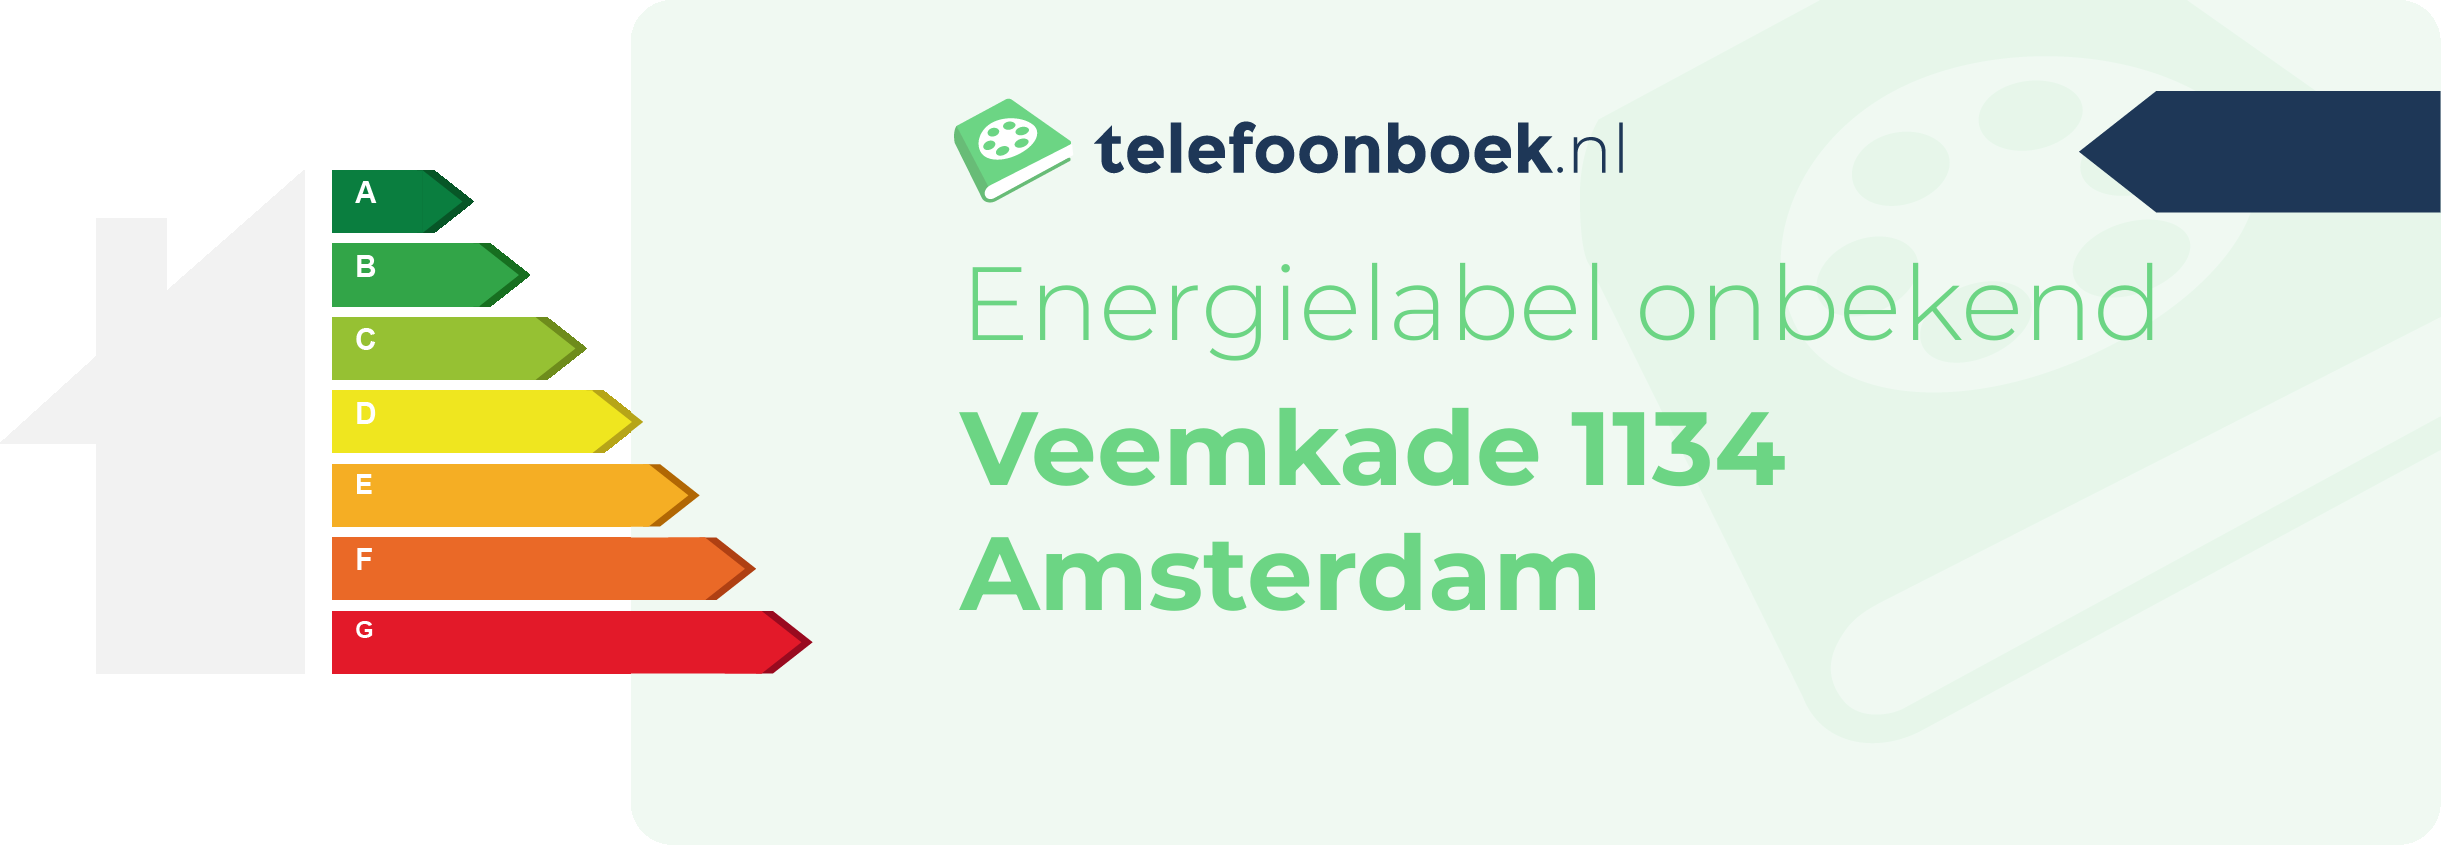 Energielabel Veemkade 1134 Amsterdam